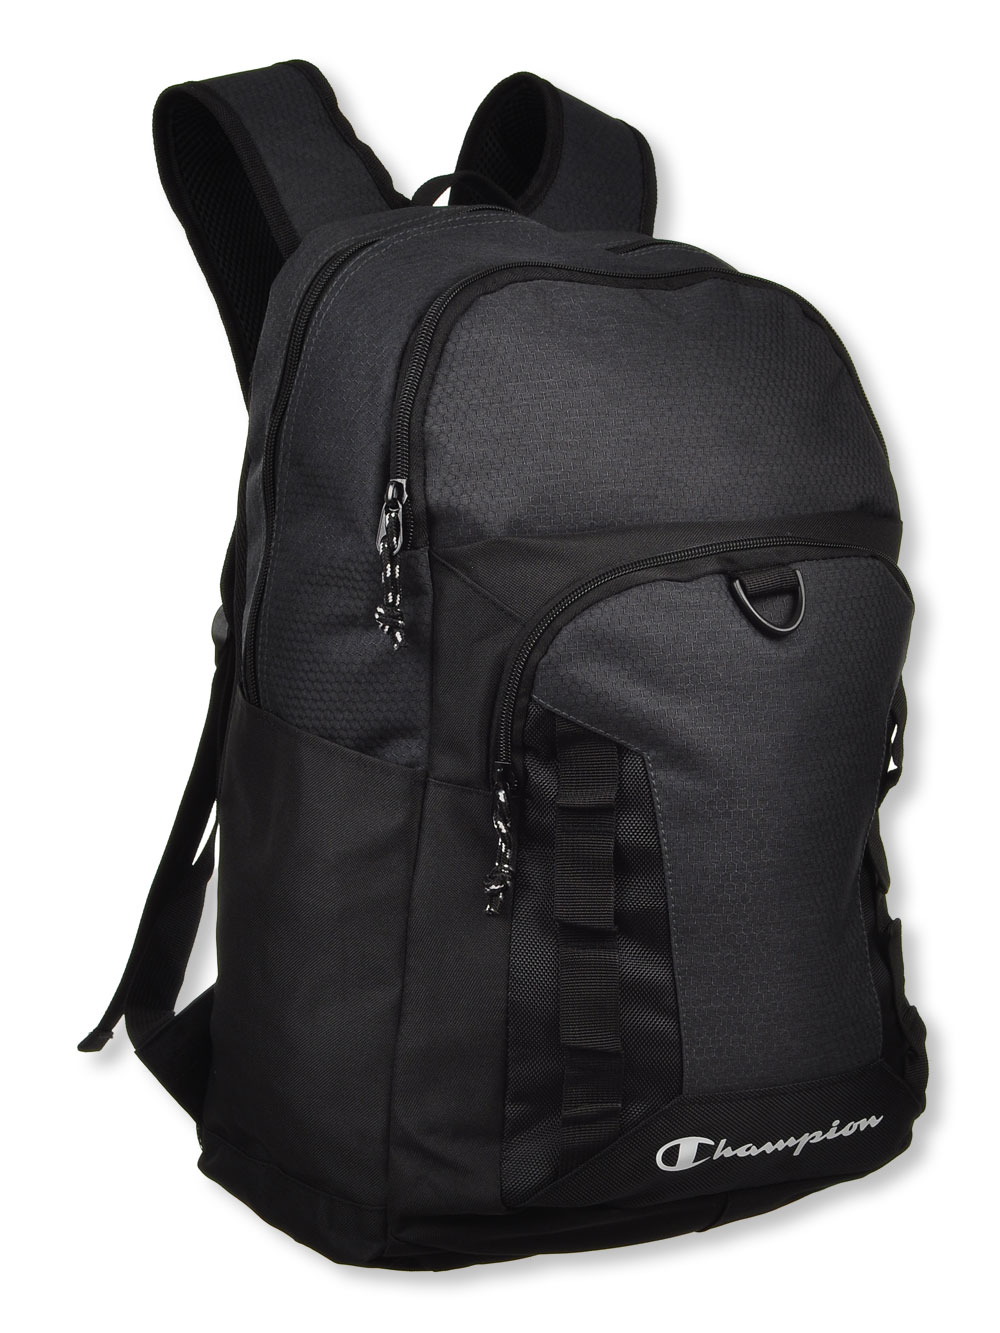 Black and Gray Backpacks